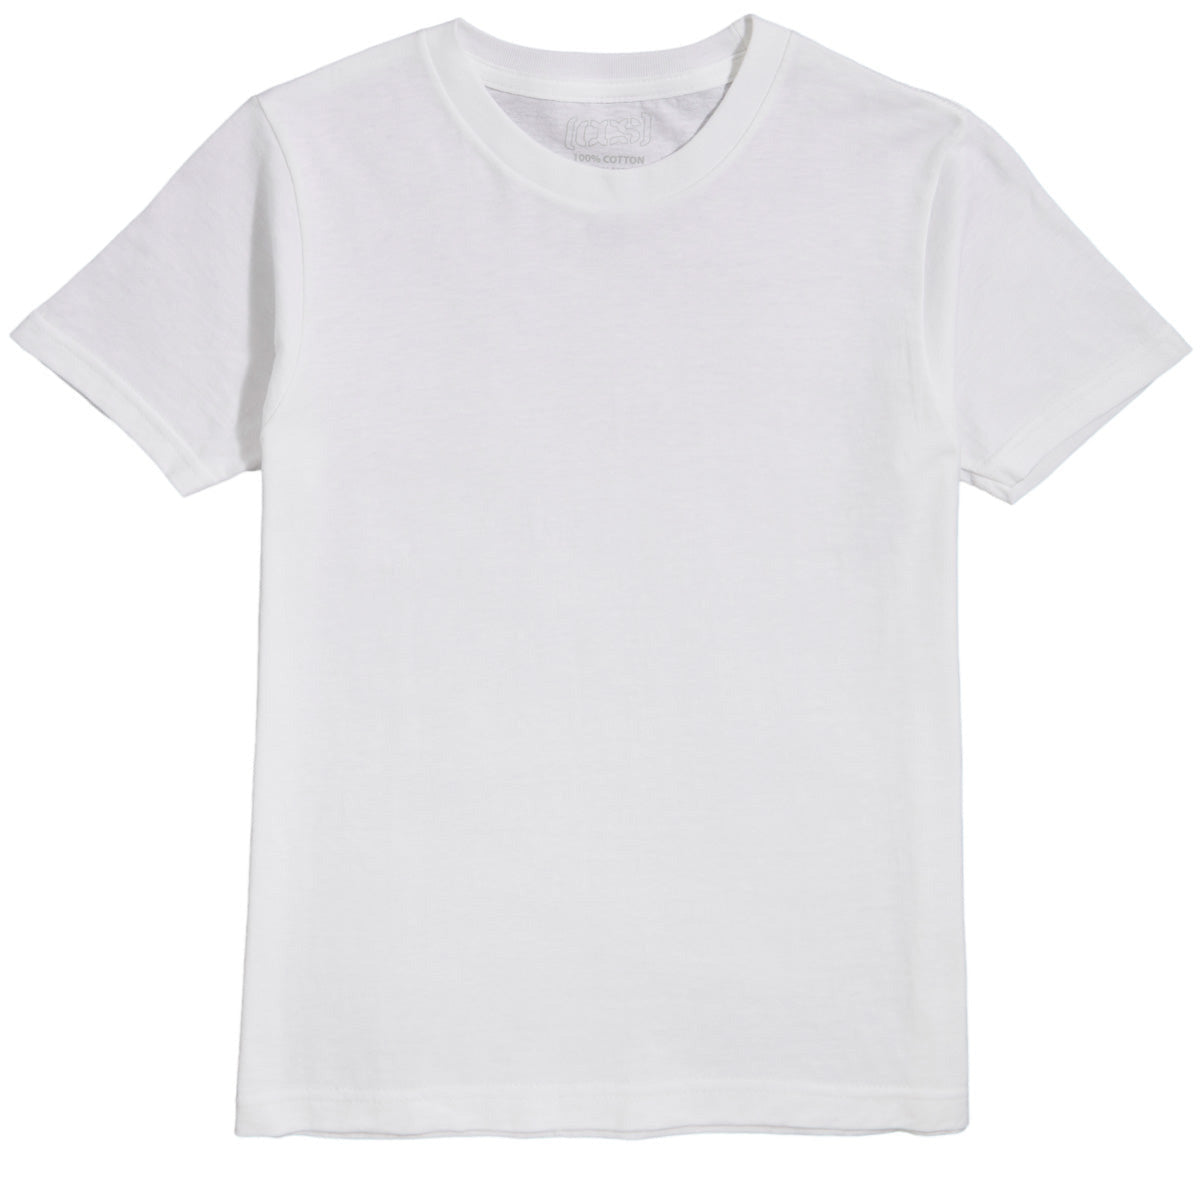 CCS Youth Basis T-Shirt - White image 1